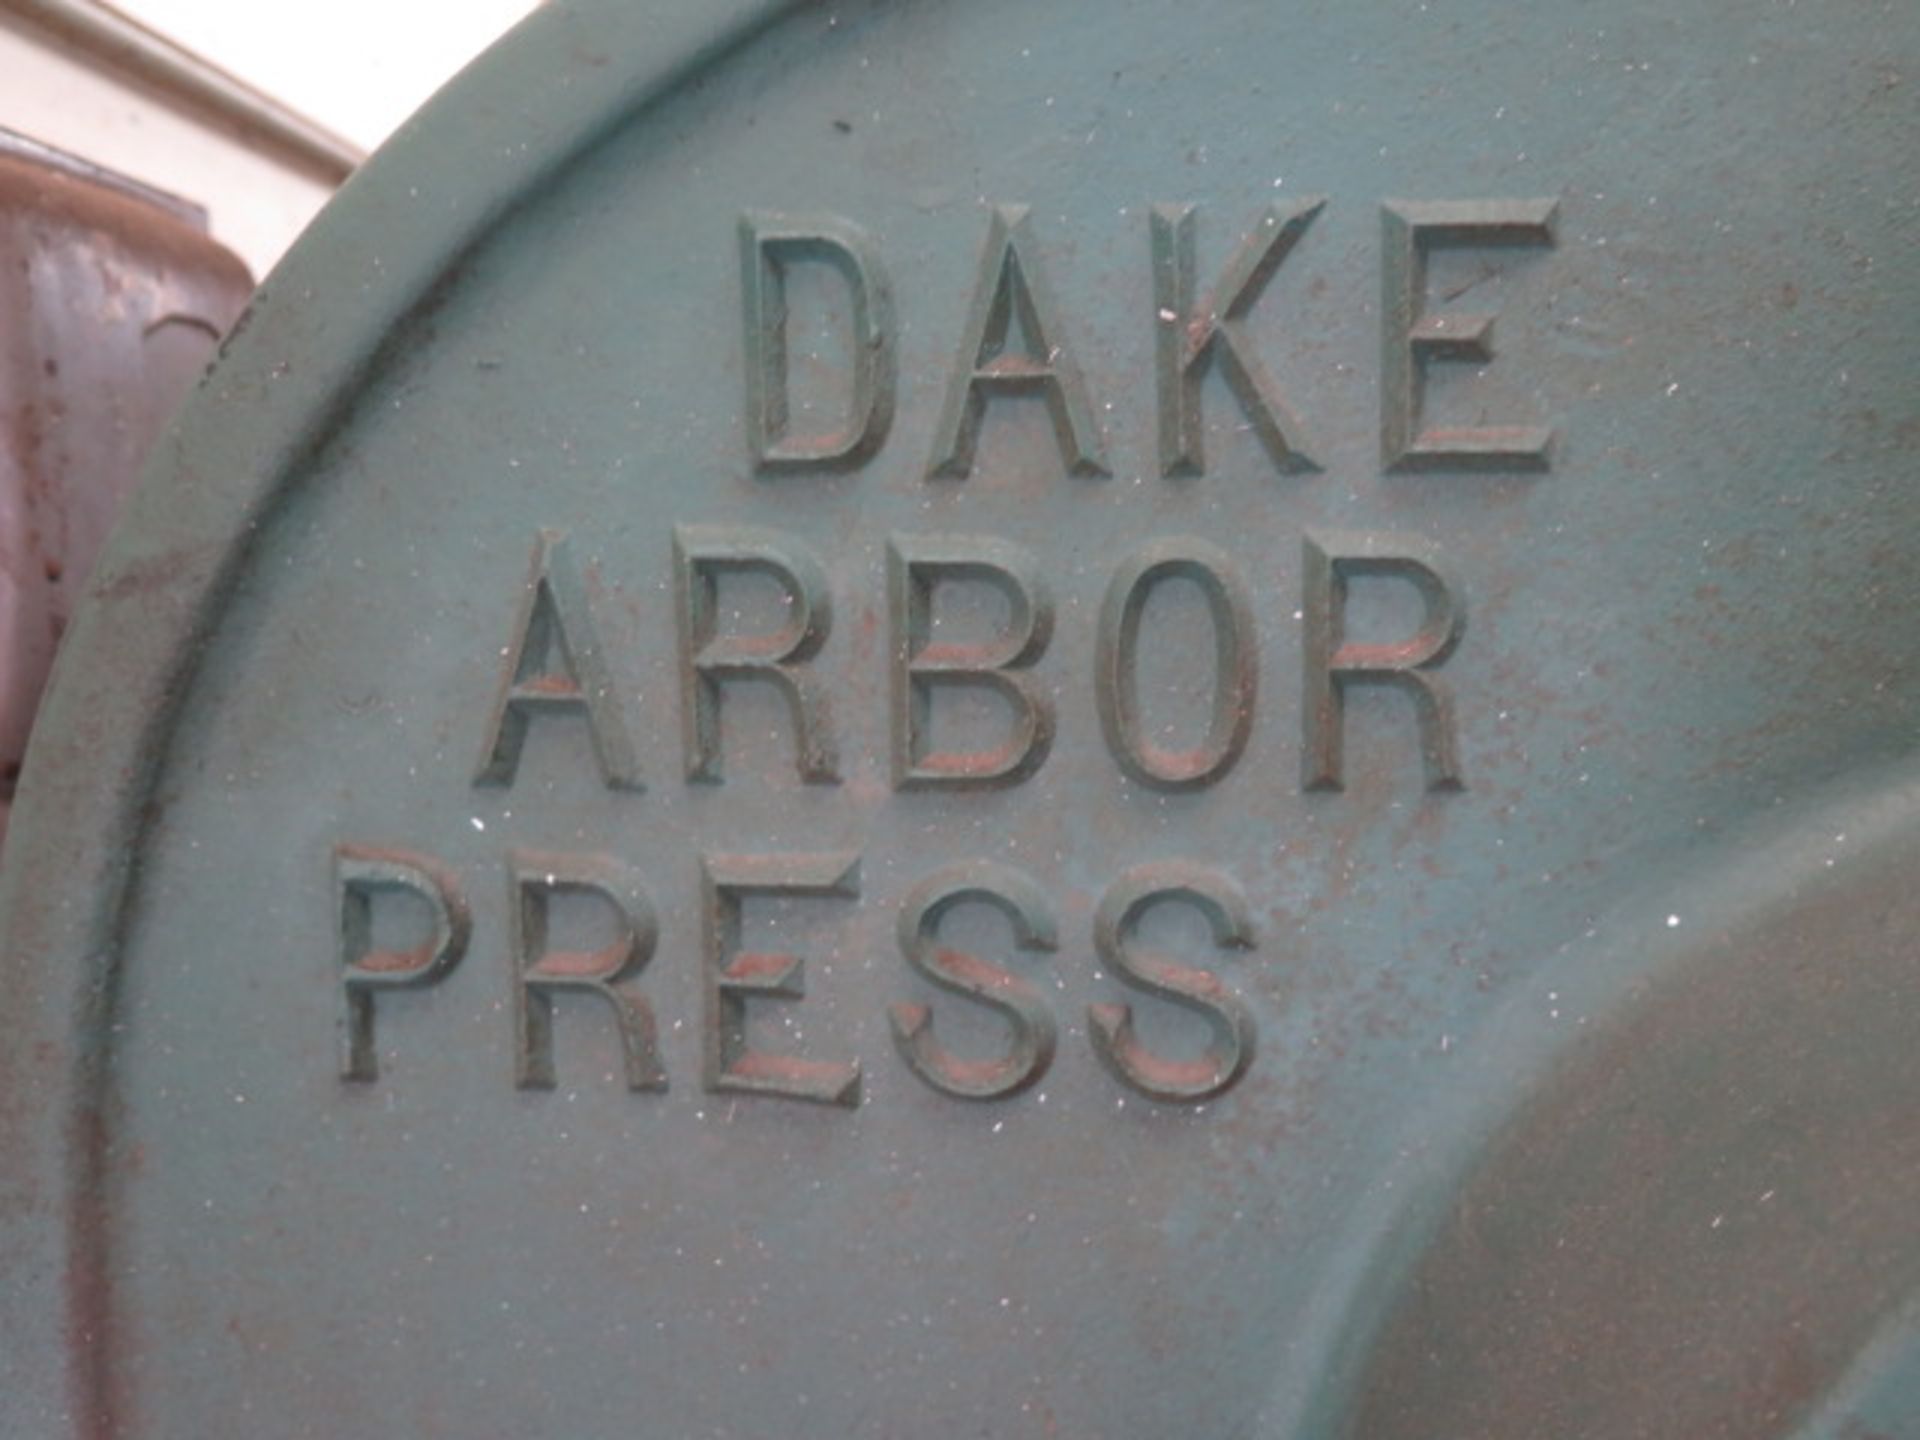 Dake 3A1 Arbor Press w/ Speed Wheel, Stand - Image 5 of 5